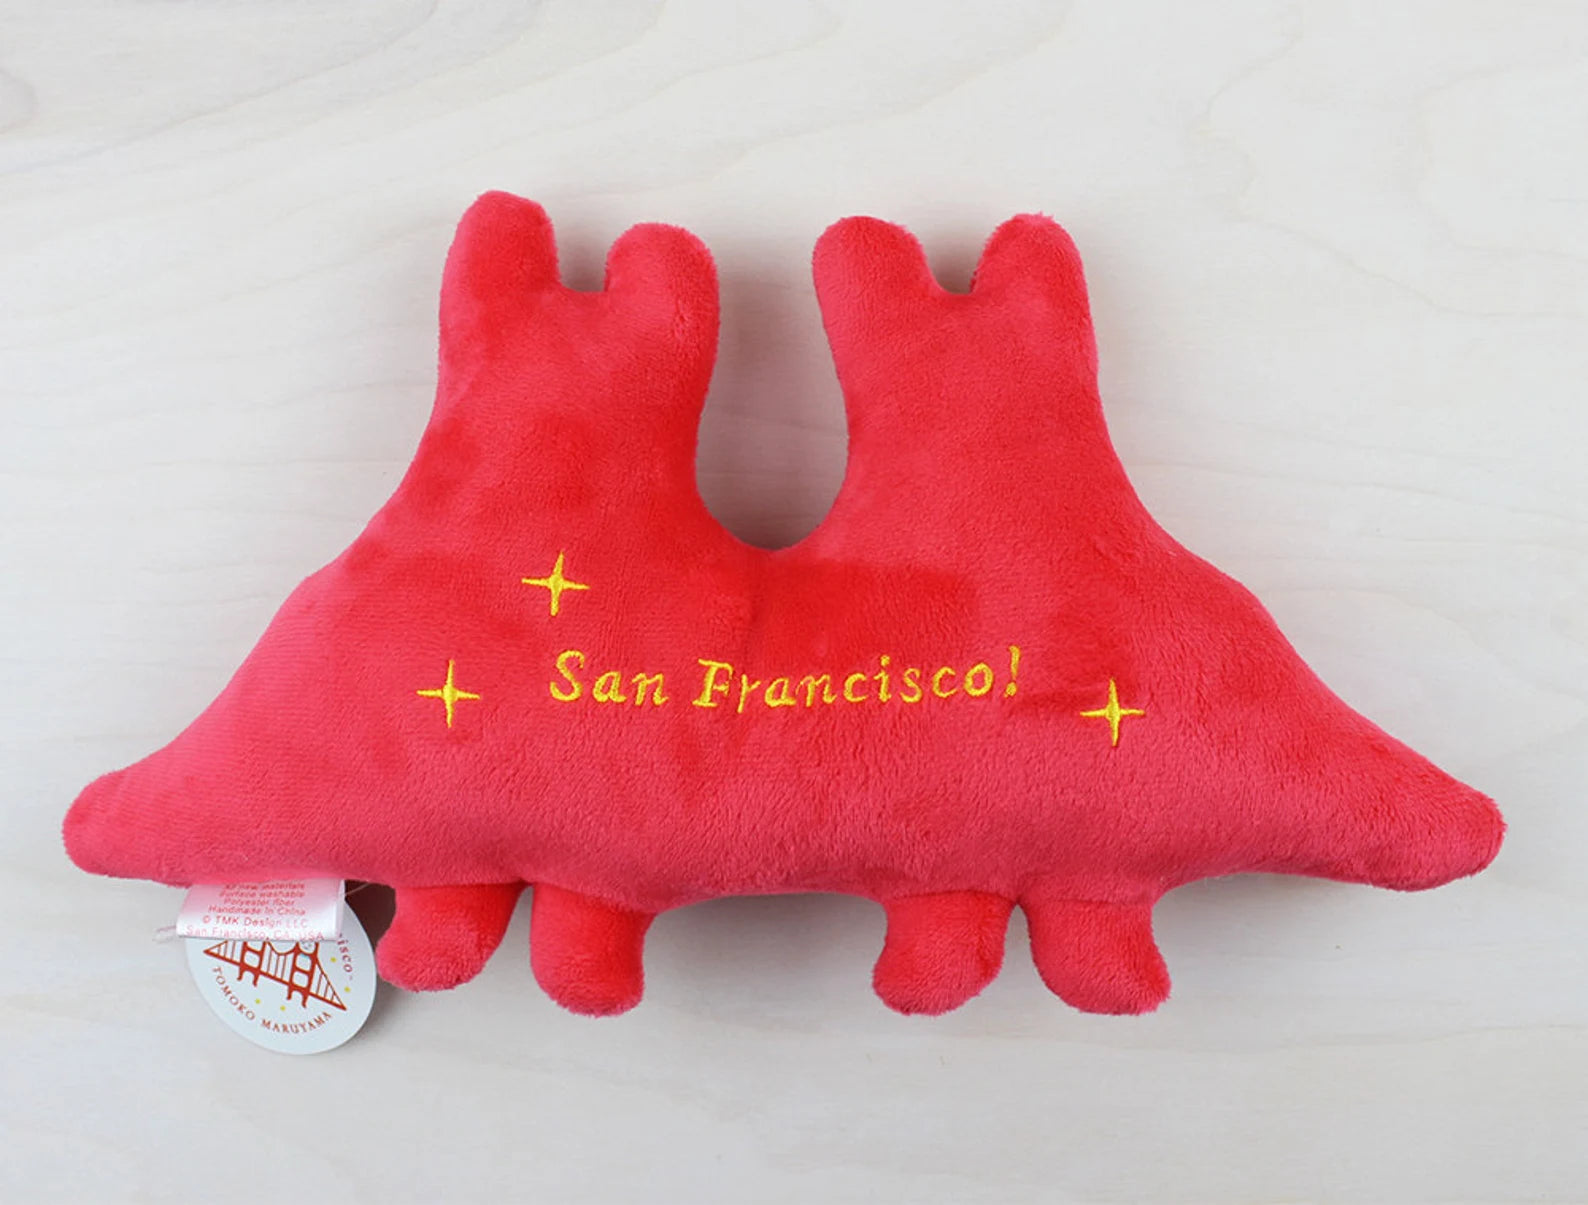 Golden Gate Bridge Twins Plush Toy, Large